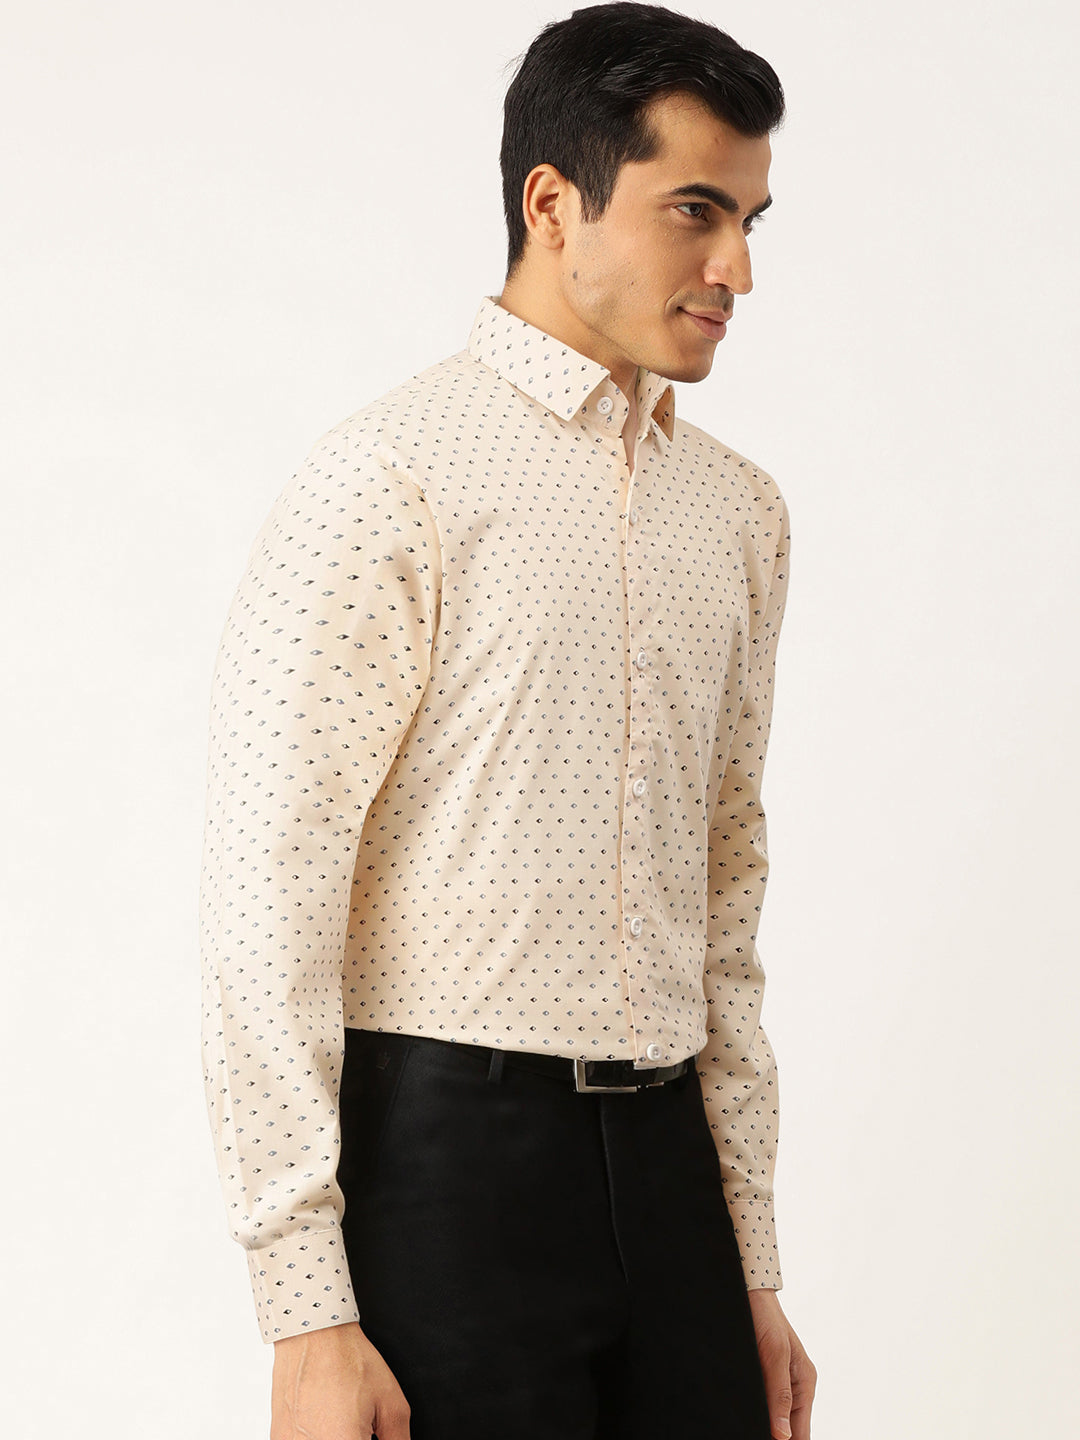 Men's Cream Cotton Printed Formal Shirts ( SF 716Cream ) - Jainish